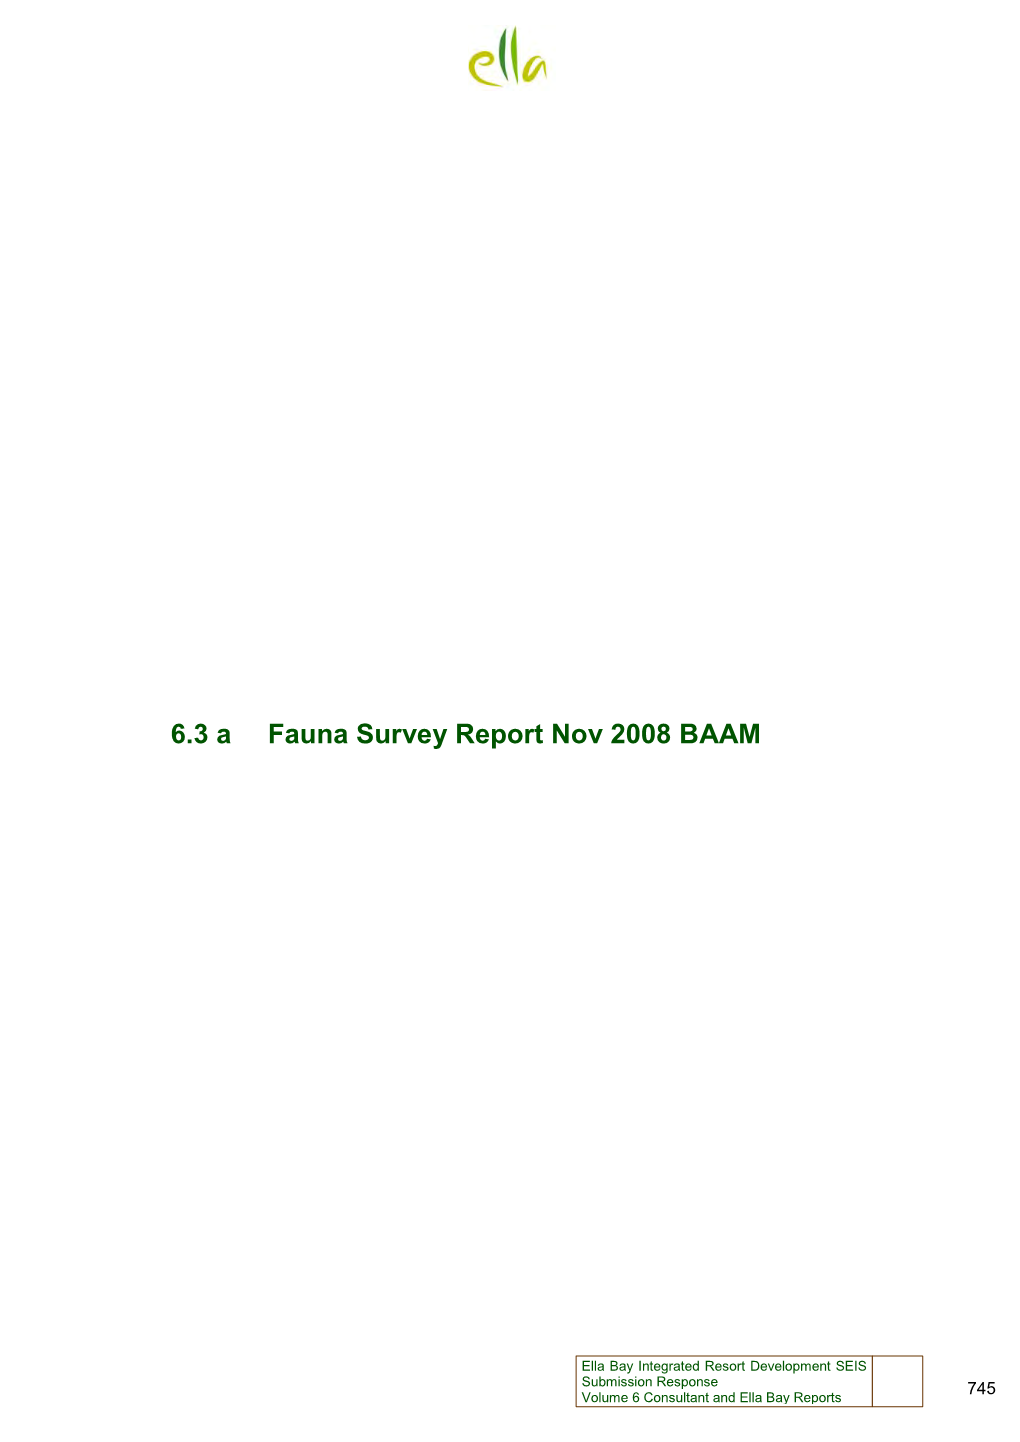 Ella Bay Fauna Survey November 2008 Volume 6.3A